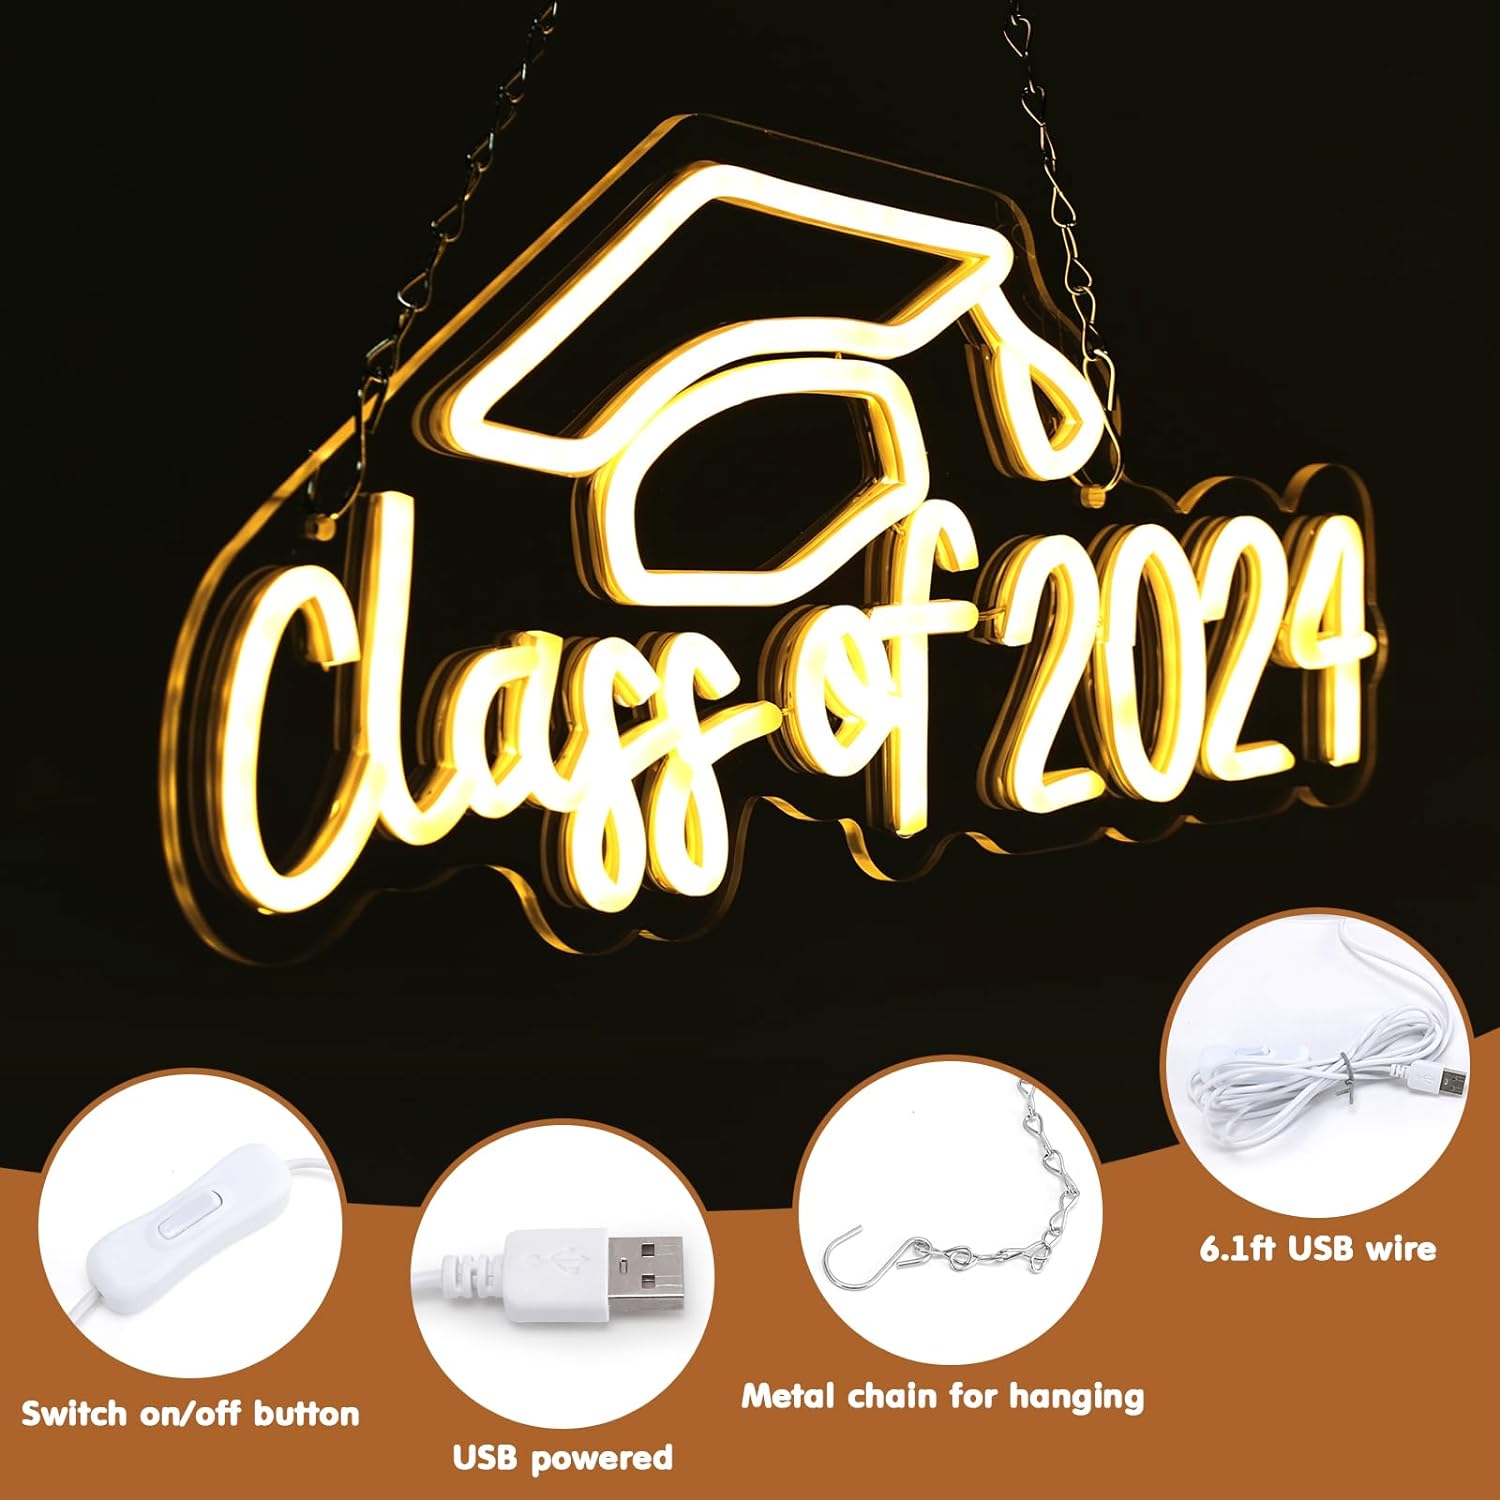 Class of 2024 Neon Sign Graduation Wall decor with Graduation Cap LED Lights